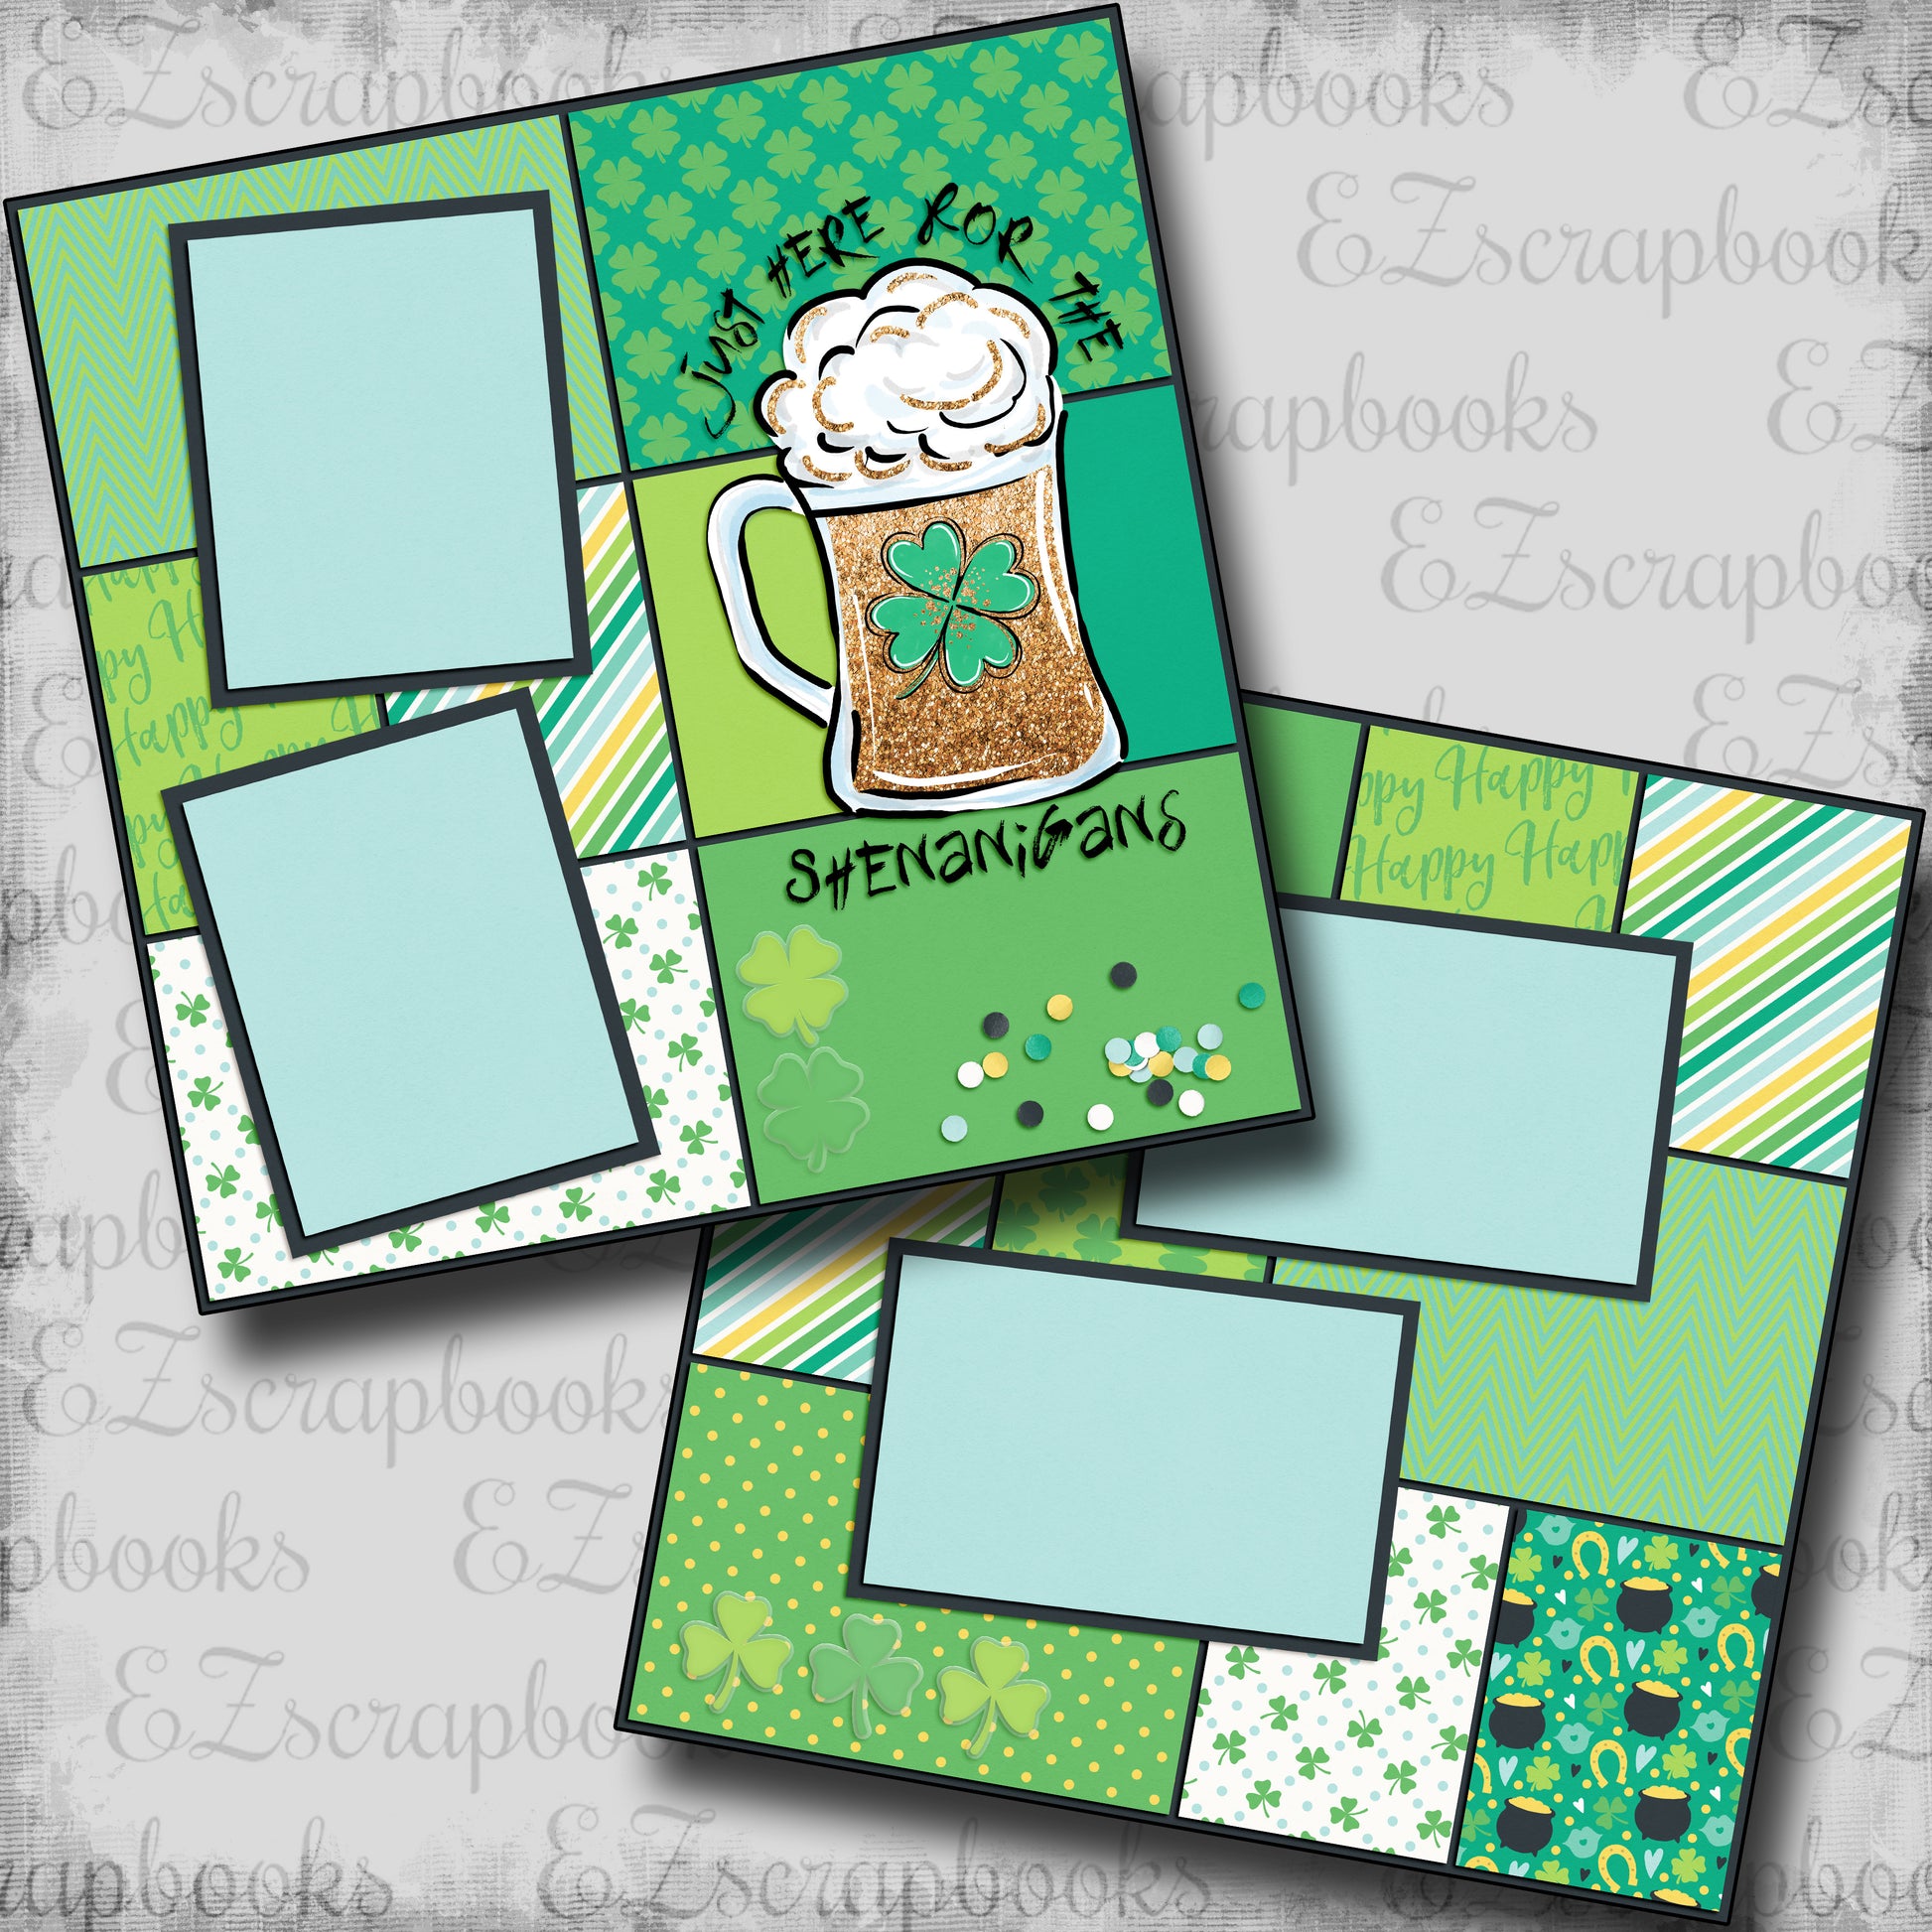 Shenanigans - 5346 - EZscrapbooks Scrapbook Layouts St Patrick's Day